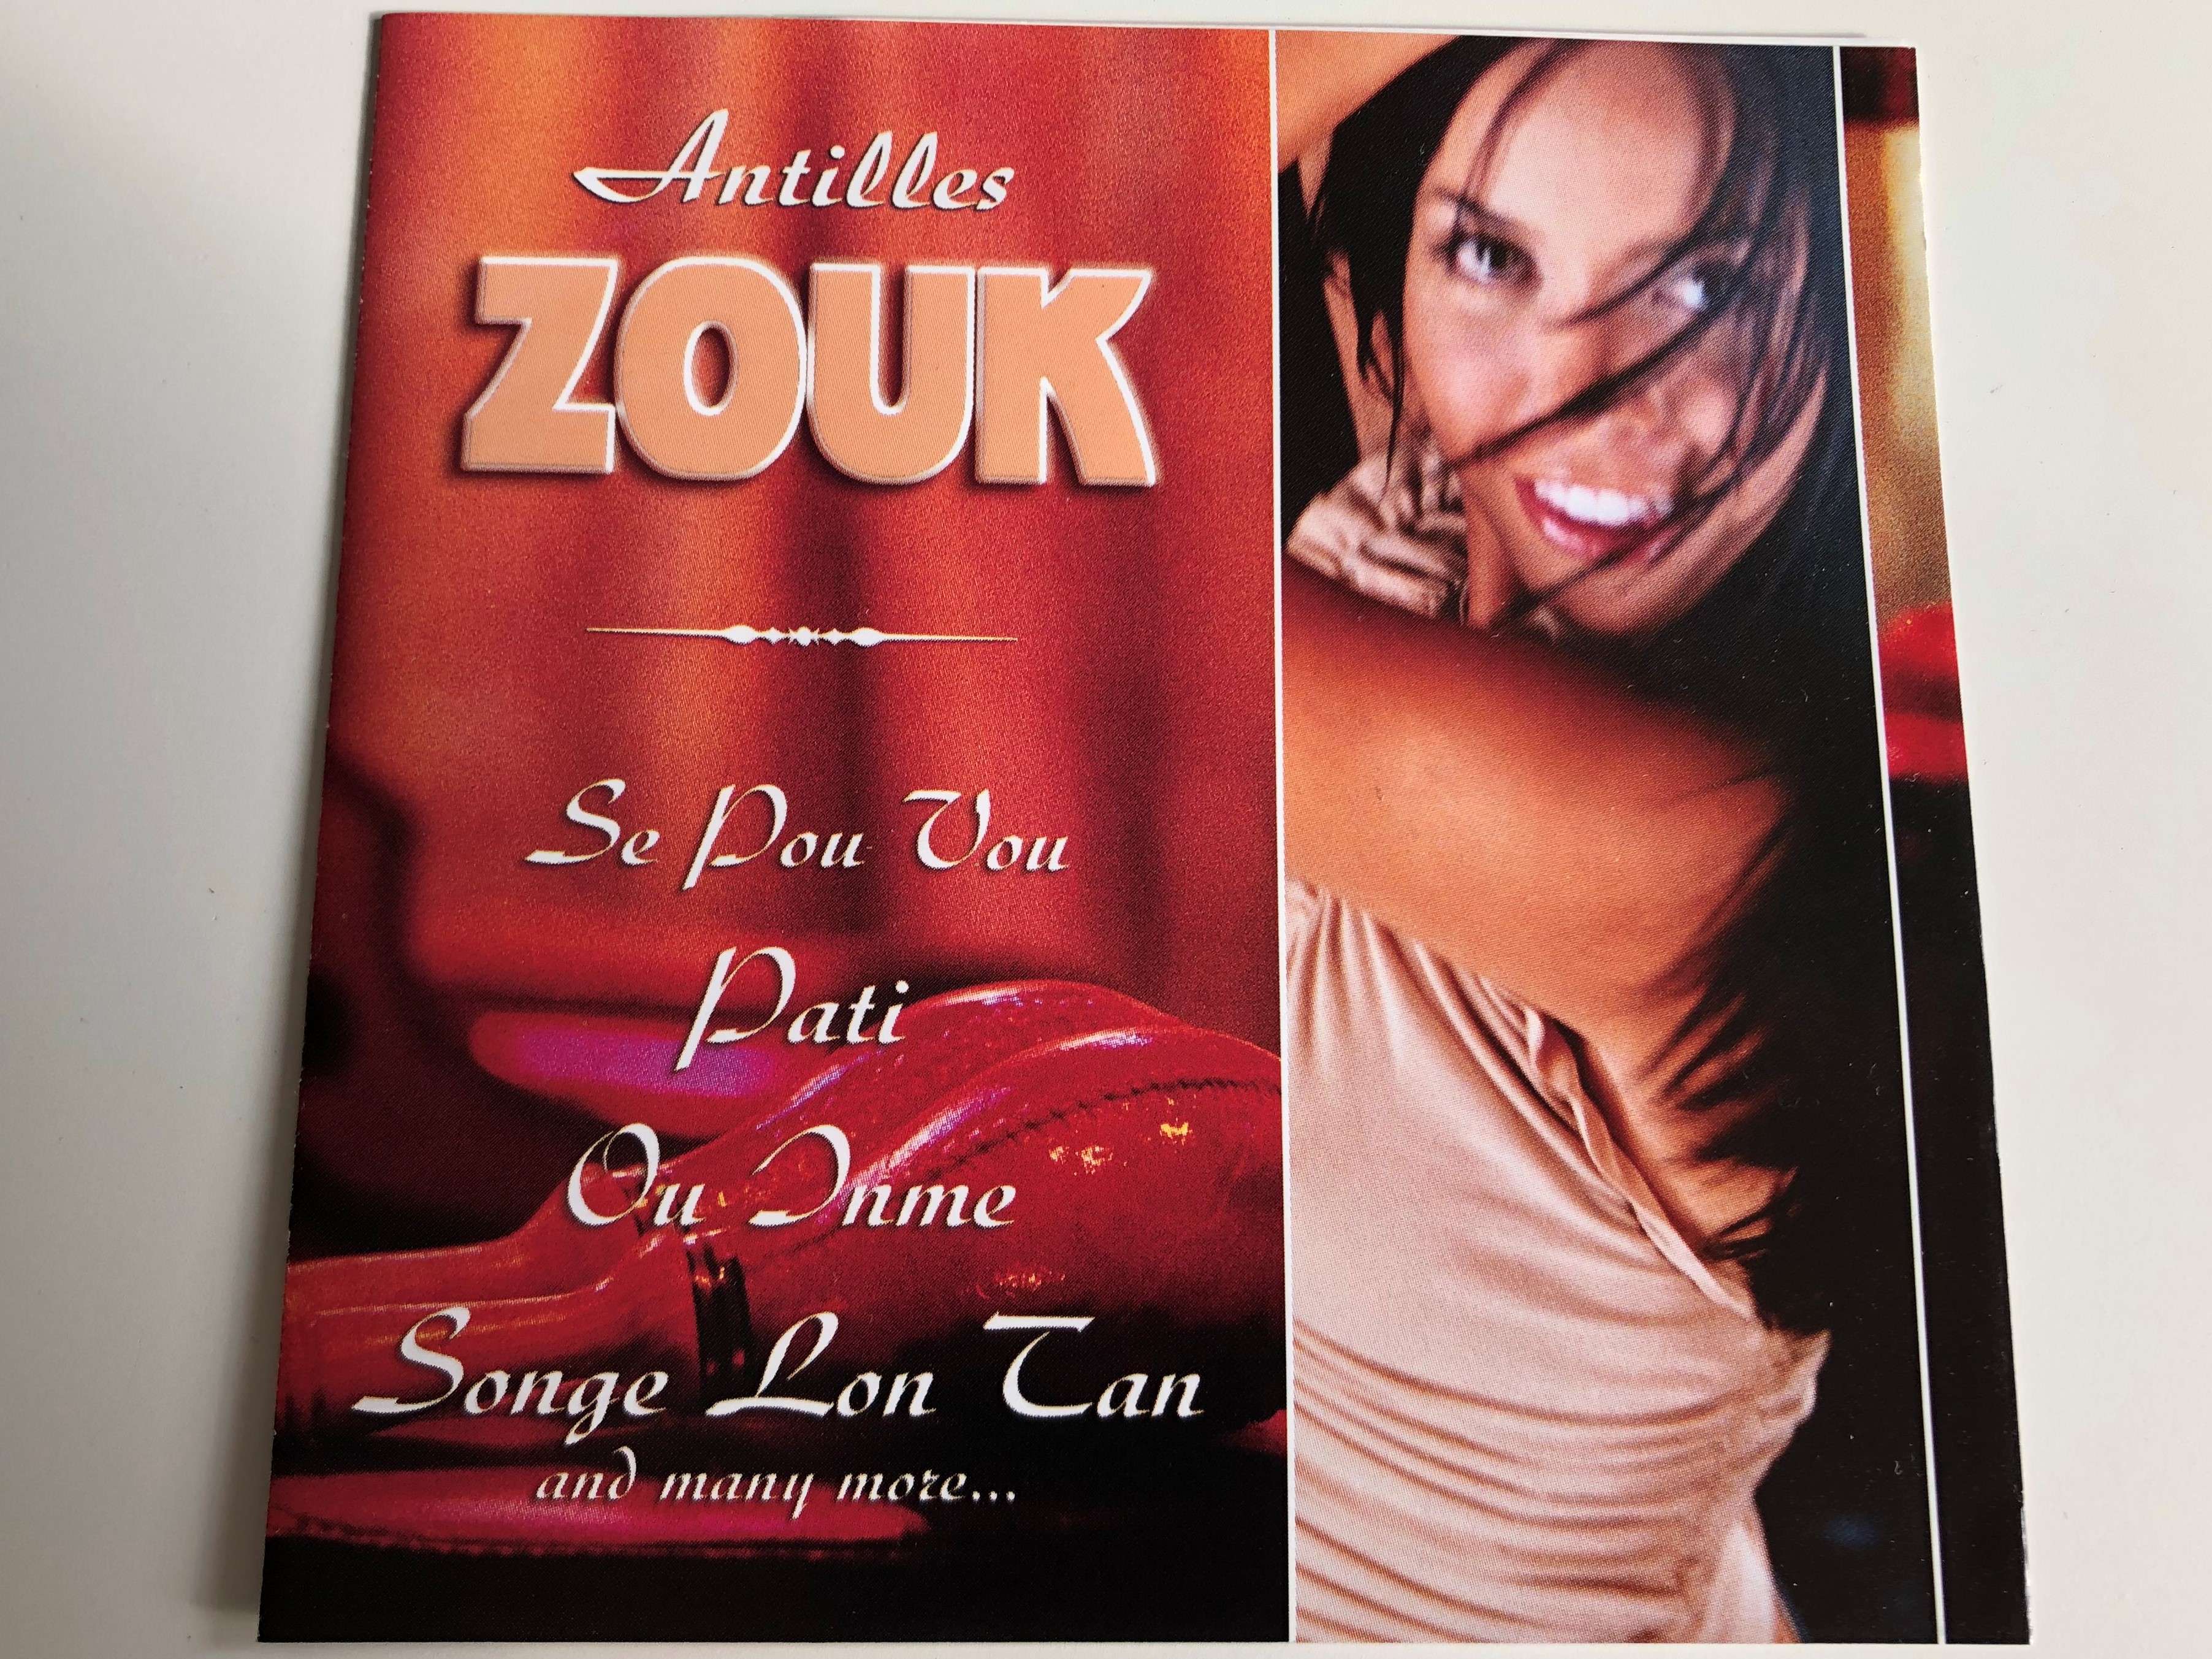 -zouk-antilles-the-best-of-latin-music-se-pou-vou-pati-ou-inme-songe-lon-tan-and-many-more..-audio-cd-2003-3808042-galaxy-music-1-.jpg